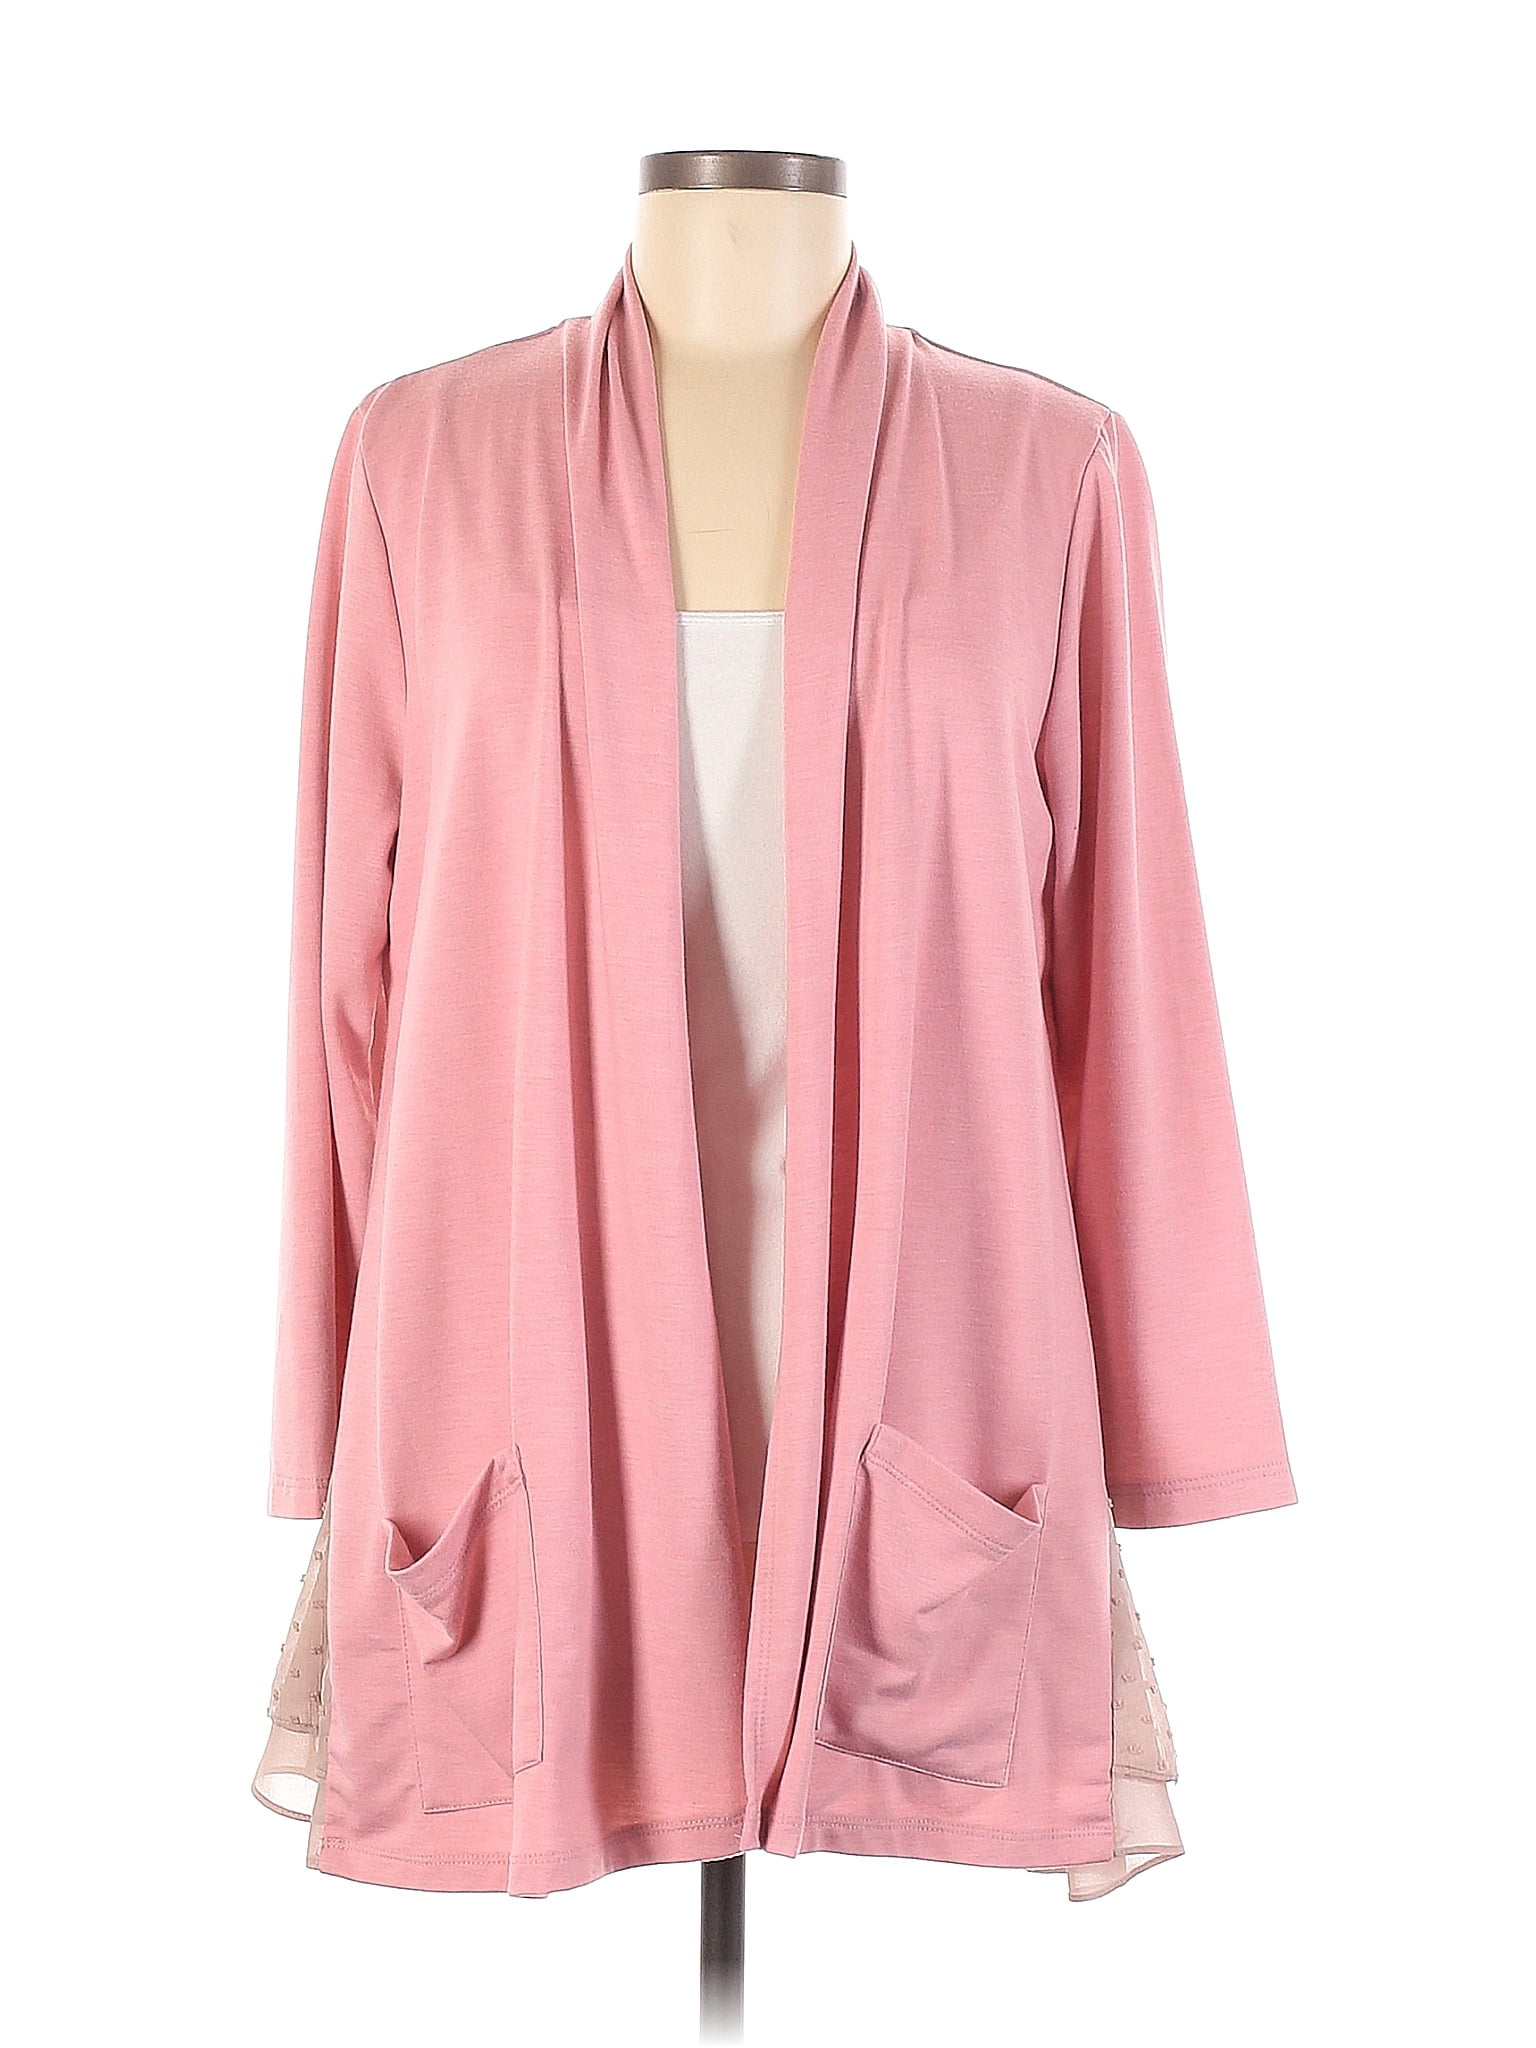 LOGO by Lori Goldstein Color Block Pink Cardigan Size M - 74% off | thredUP